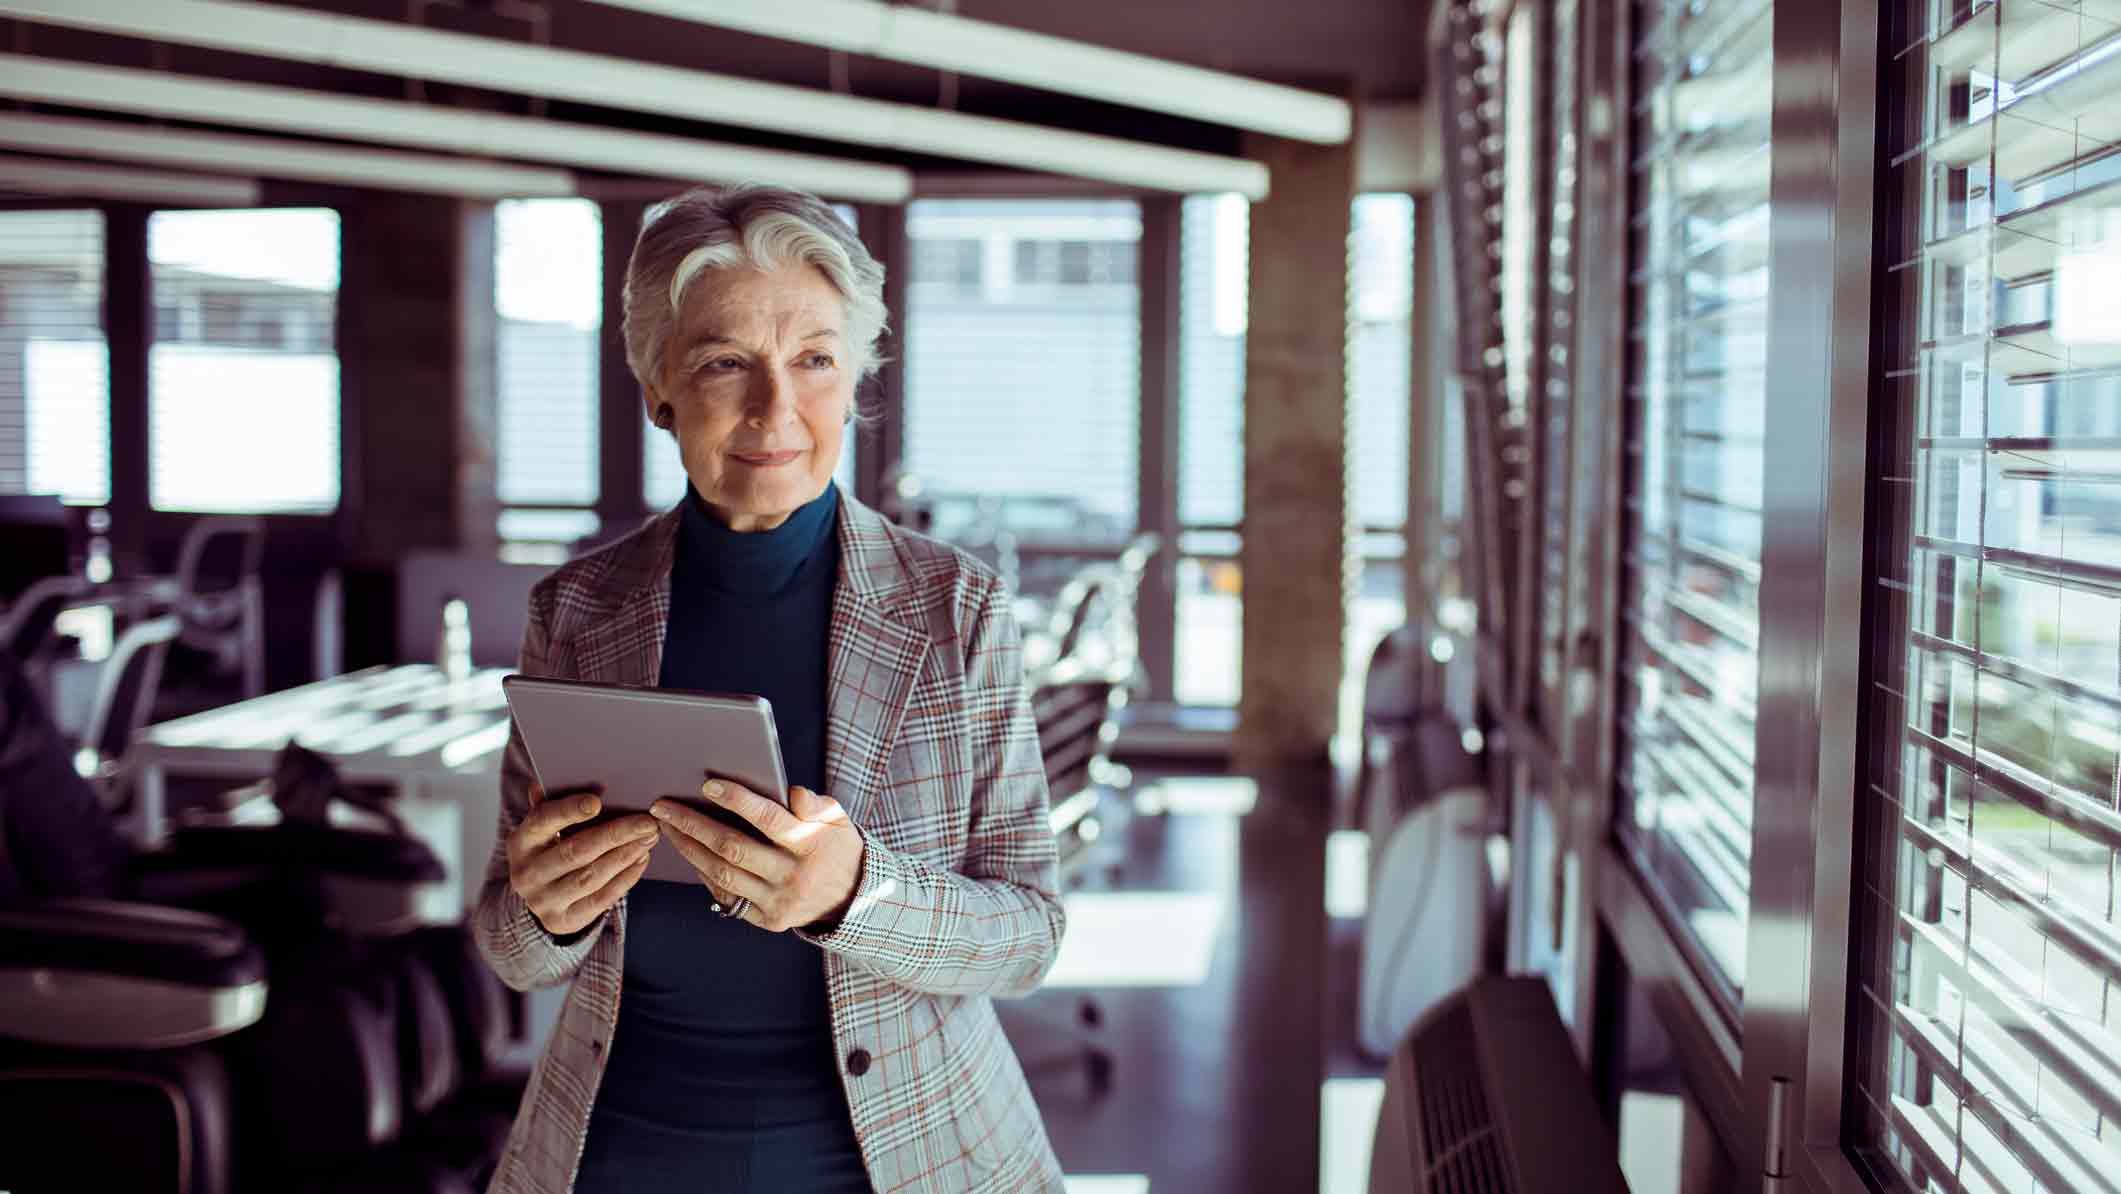 Mature-aged entrepreneurs find success